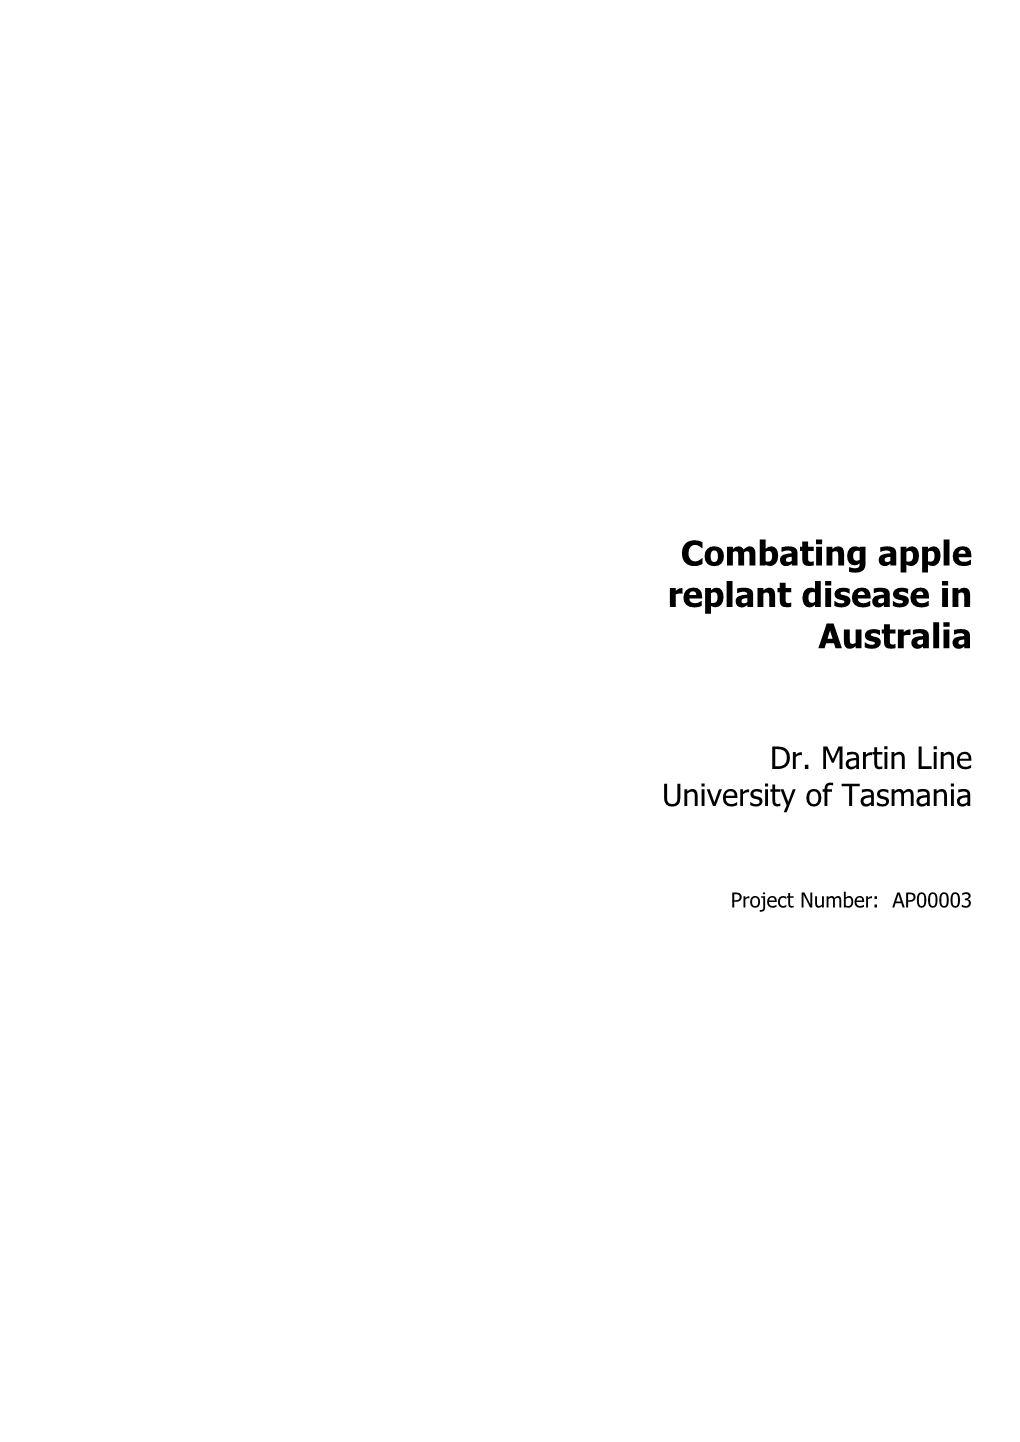 Combating Apple Replant Disease in Australia